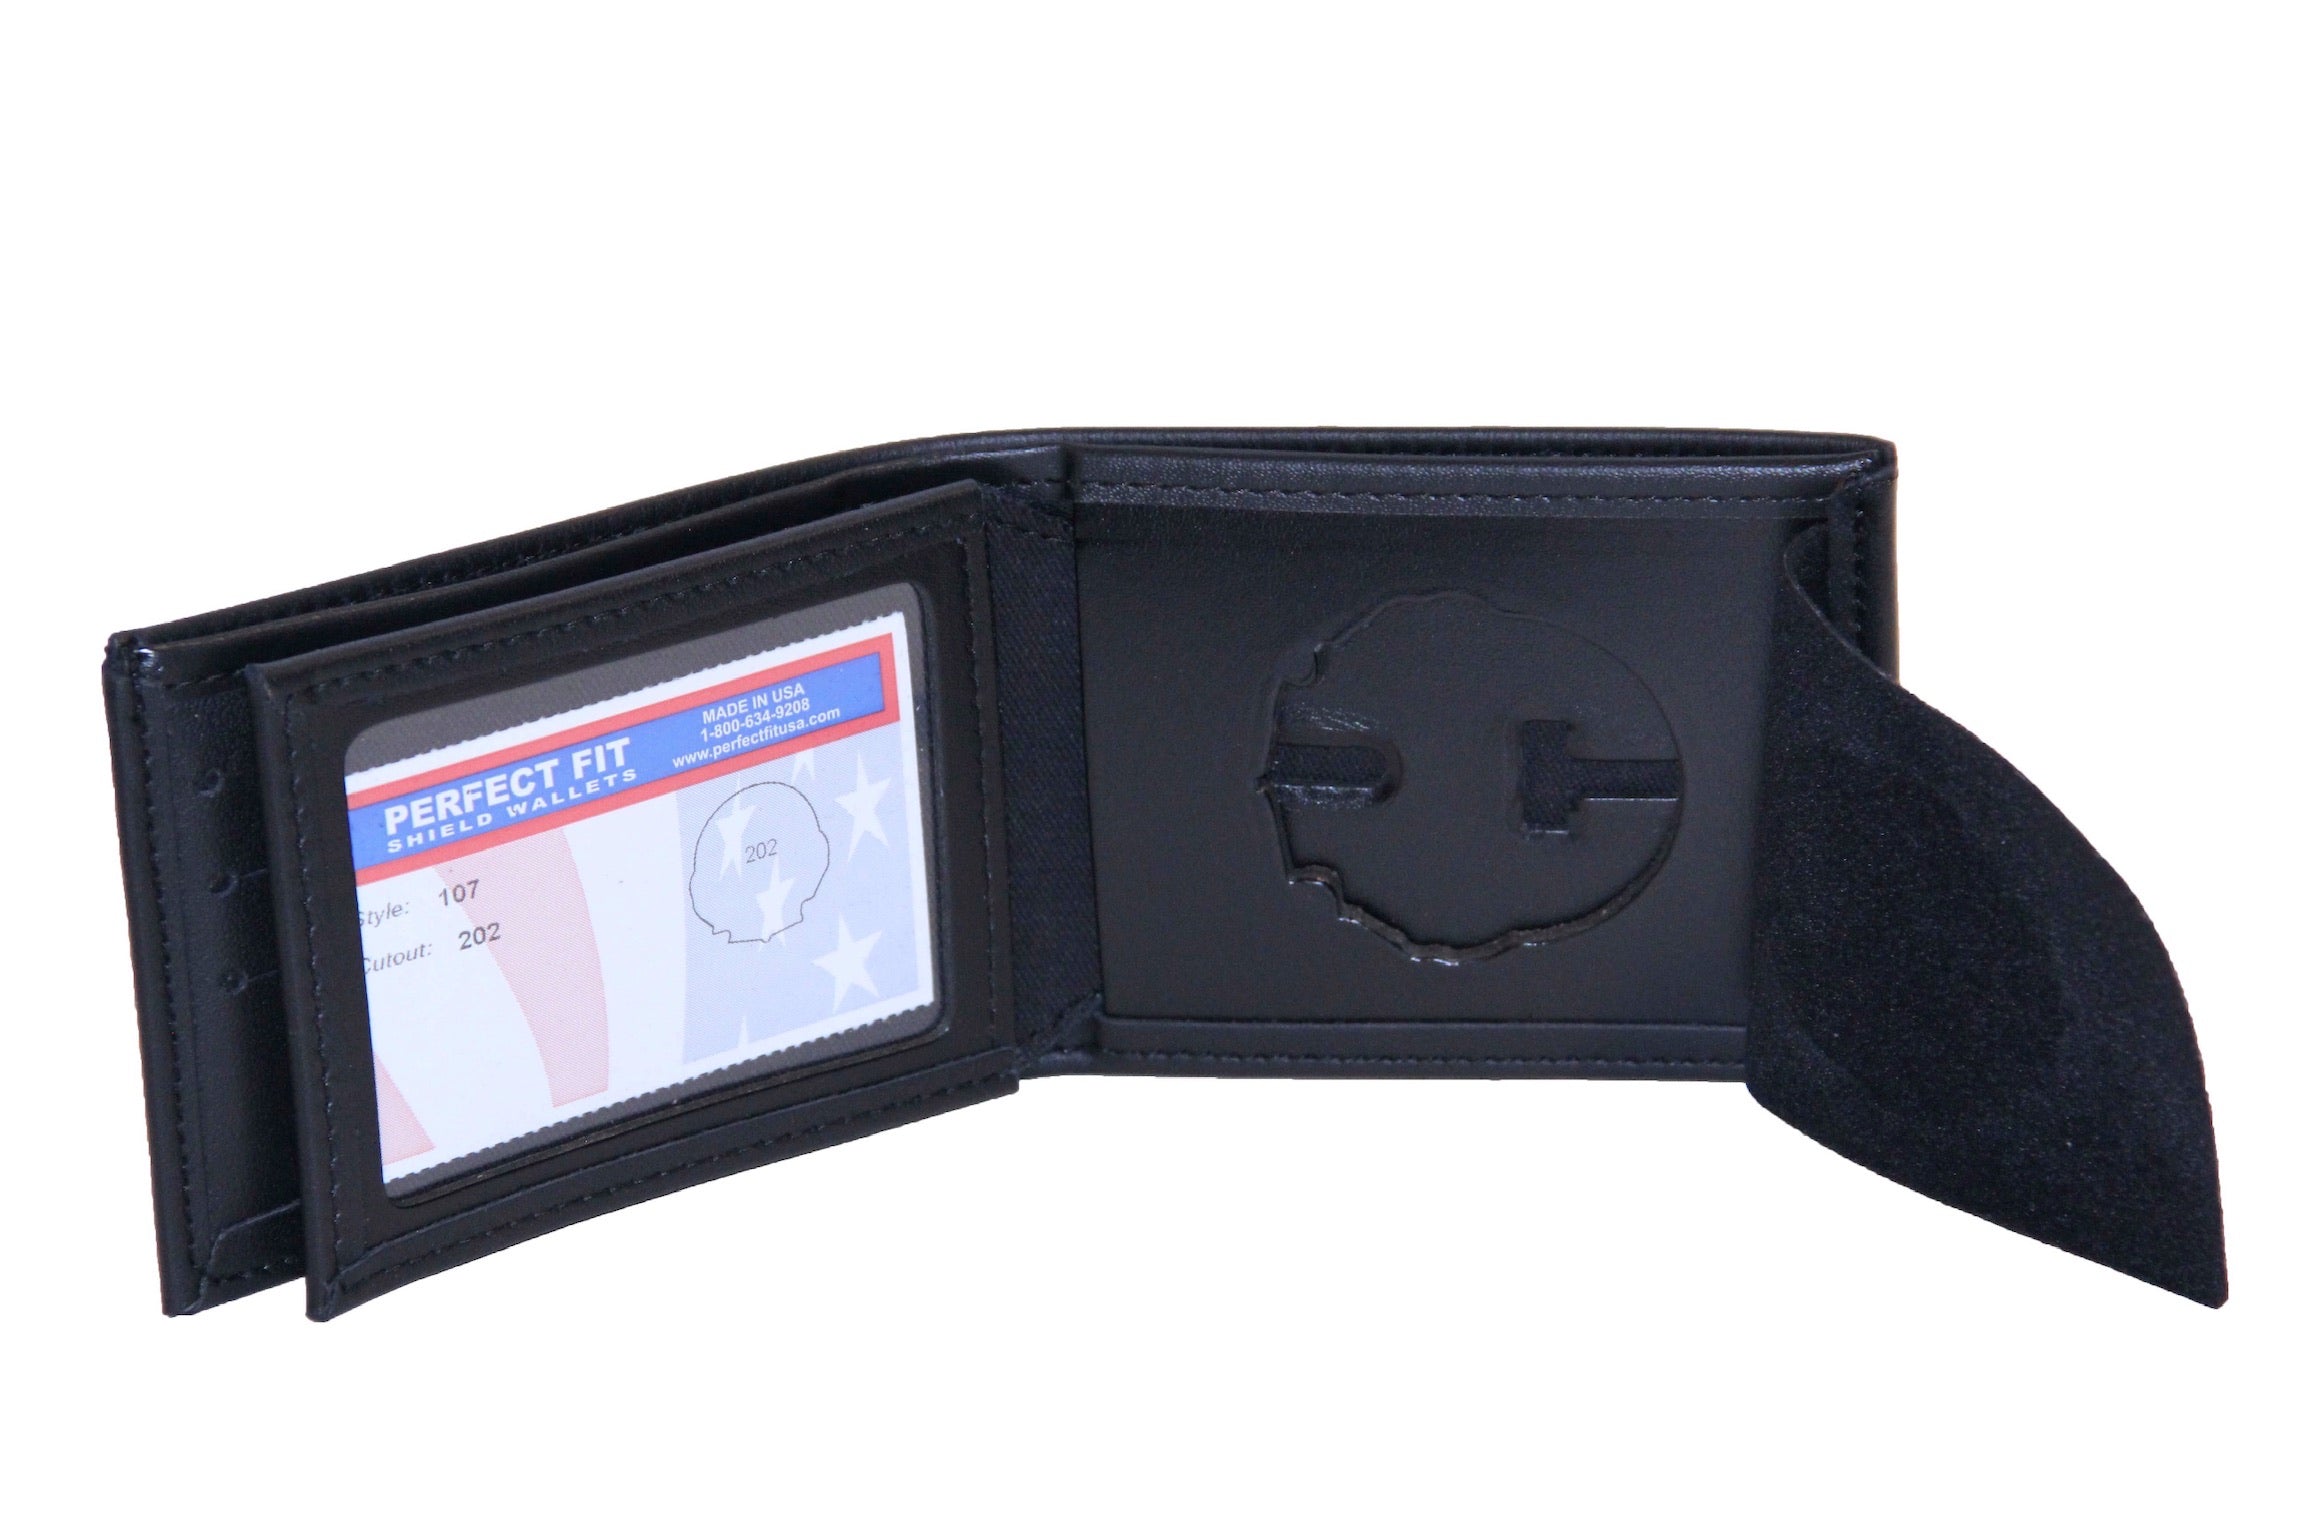 Florida Highway Patrol Bi fold Wallet with Credit Card Slots and ID Window (107)